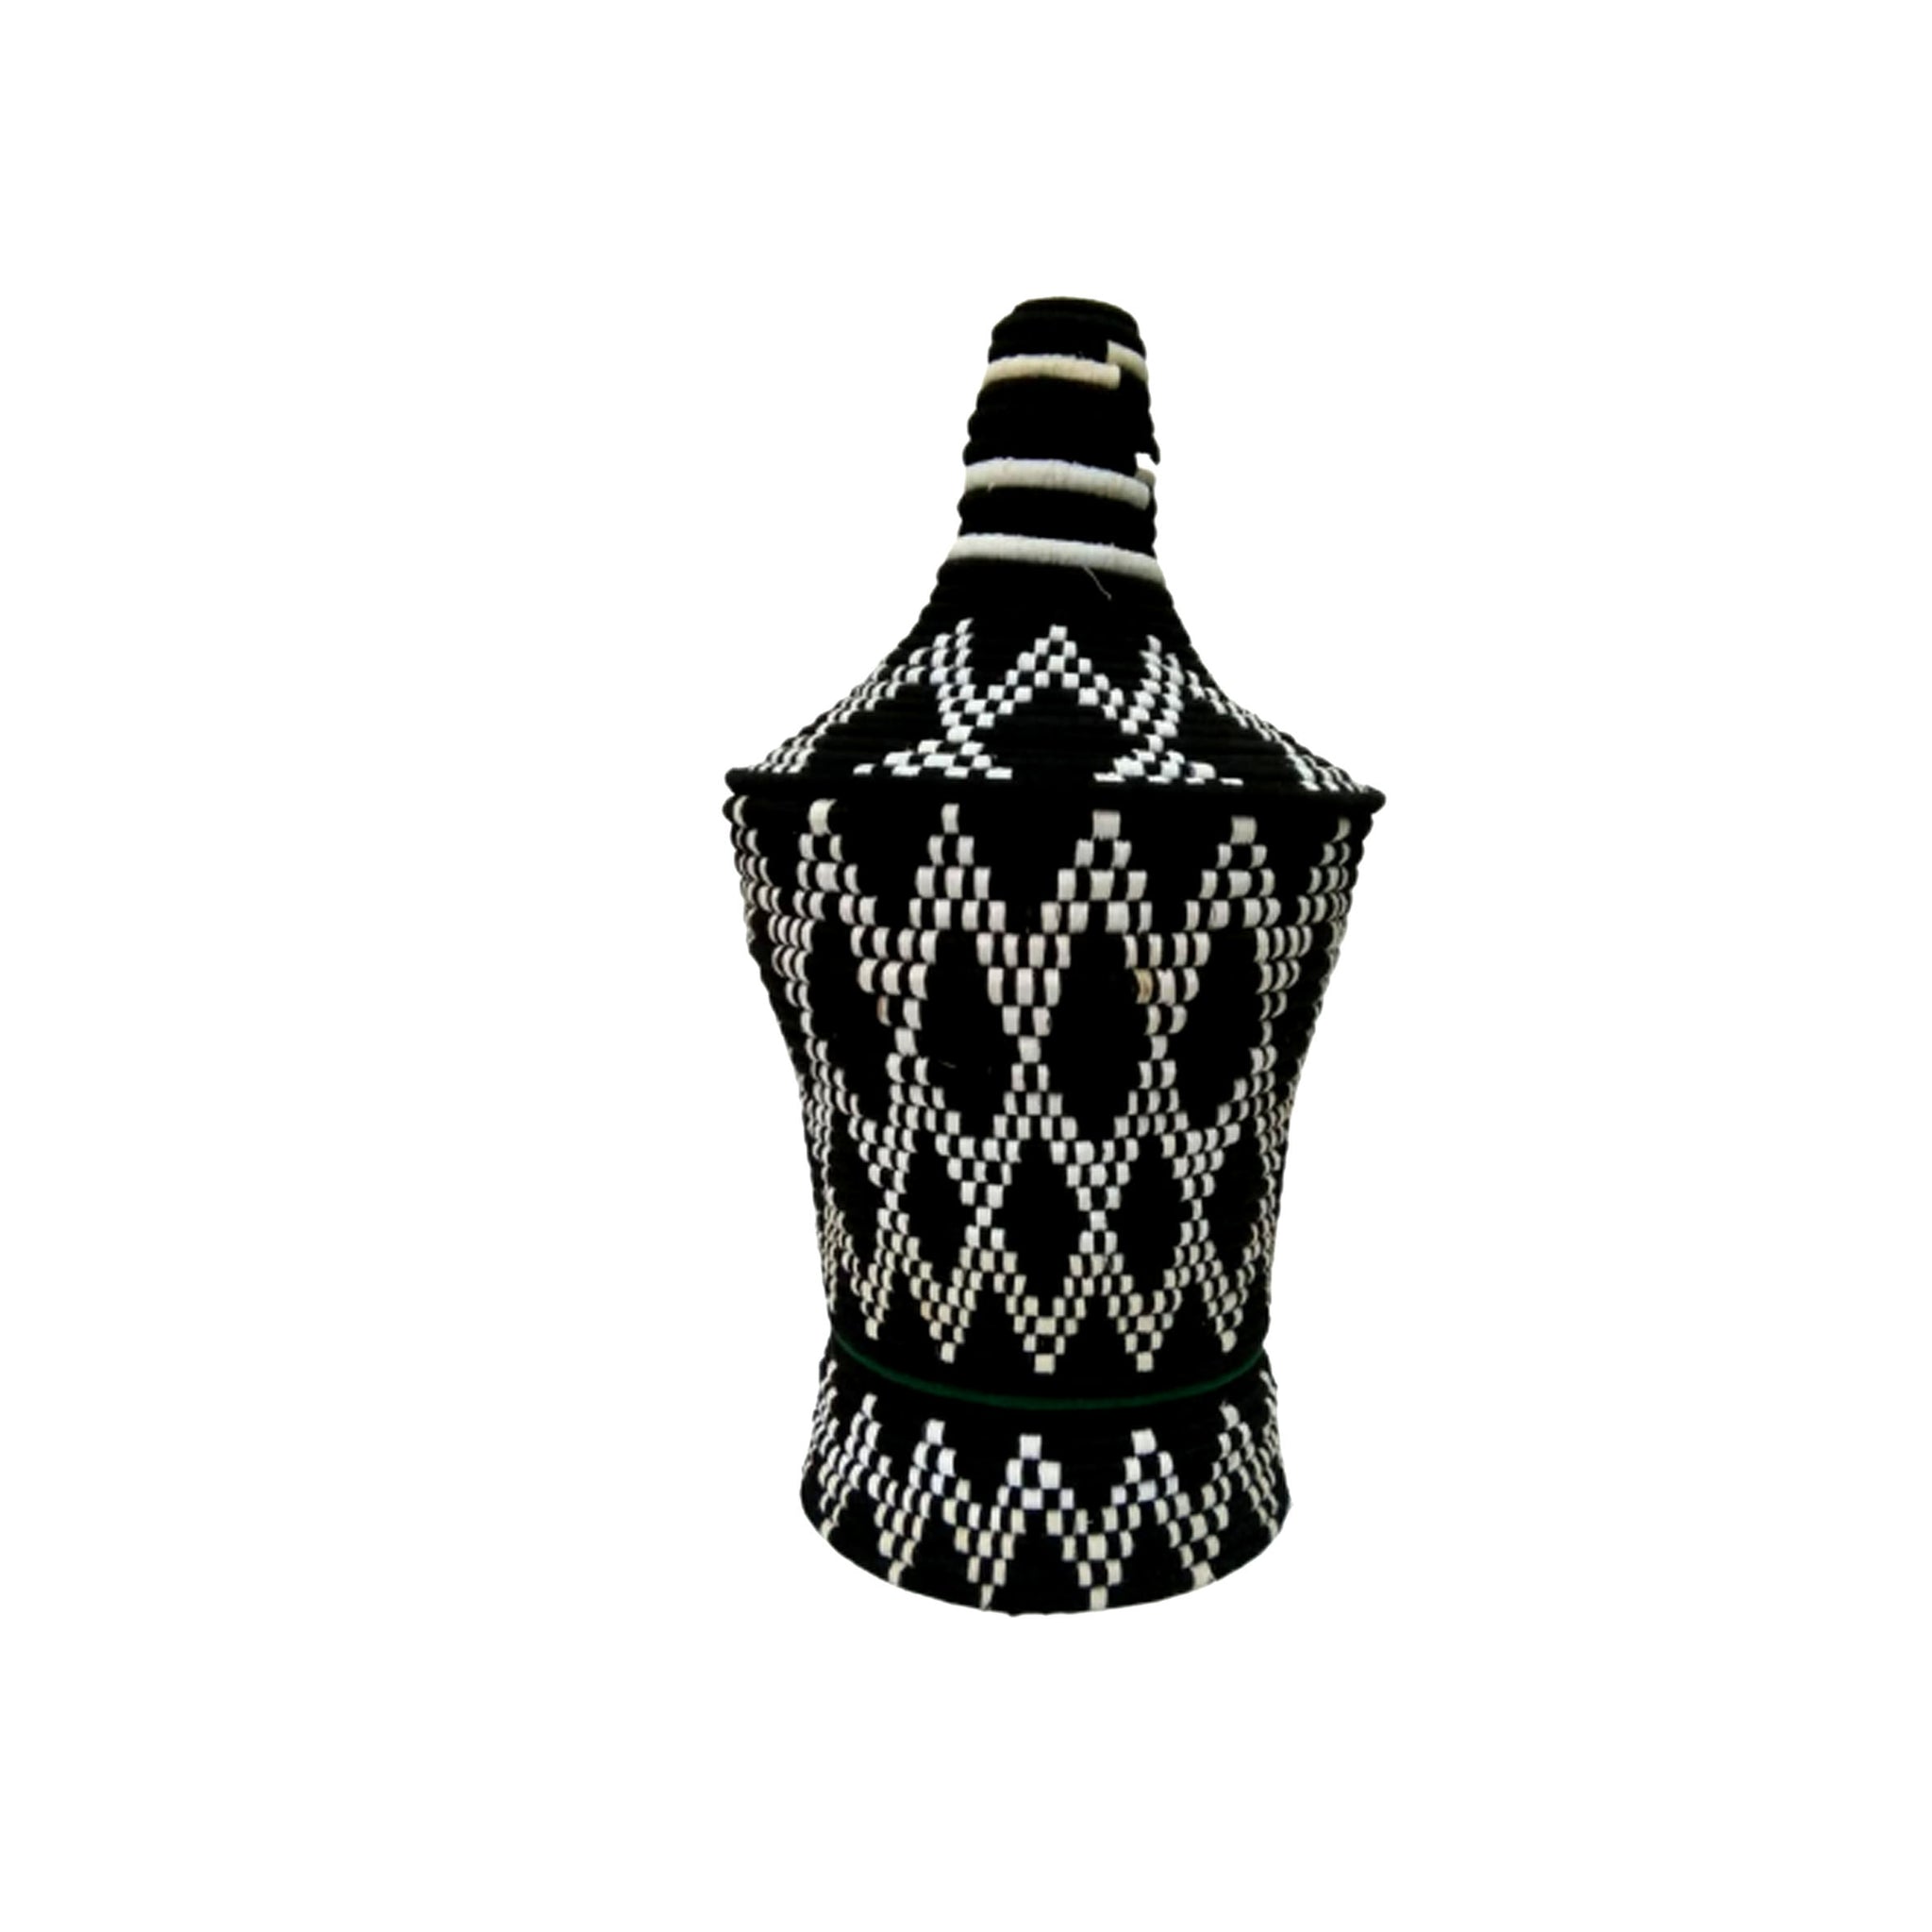 Berber basket black white approx. 70cm